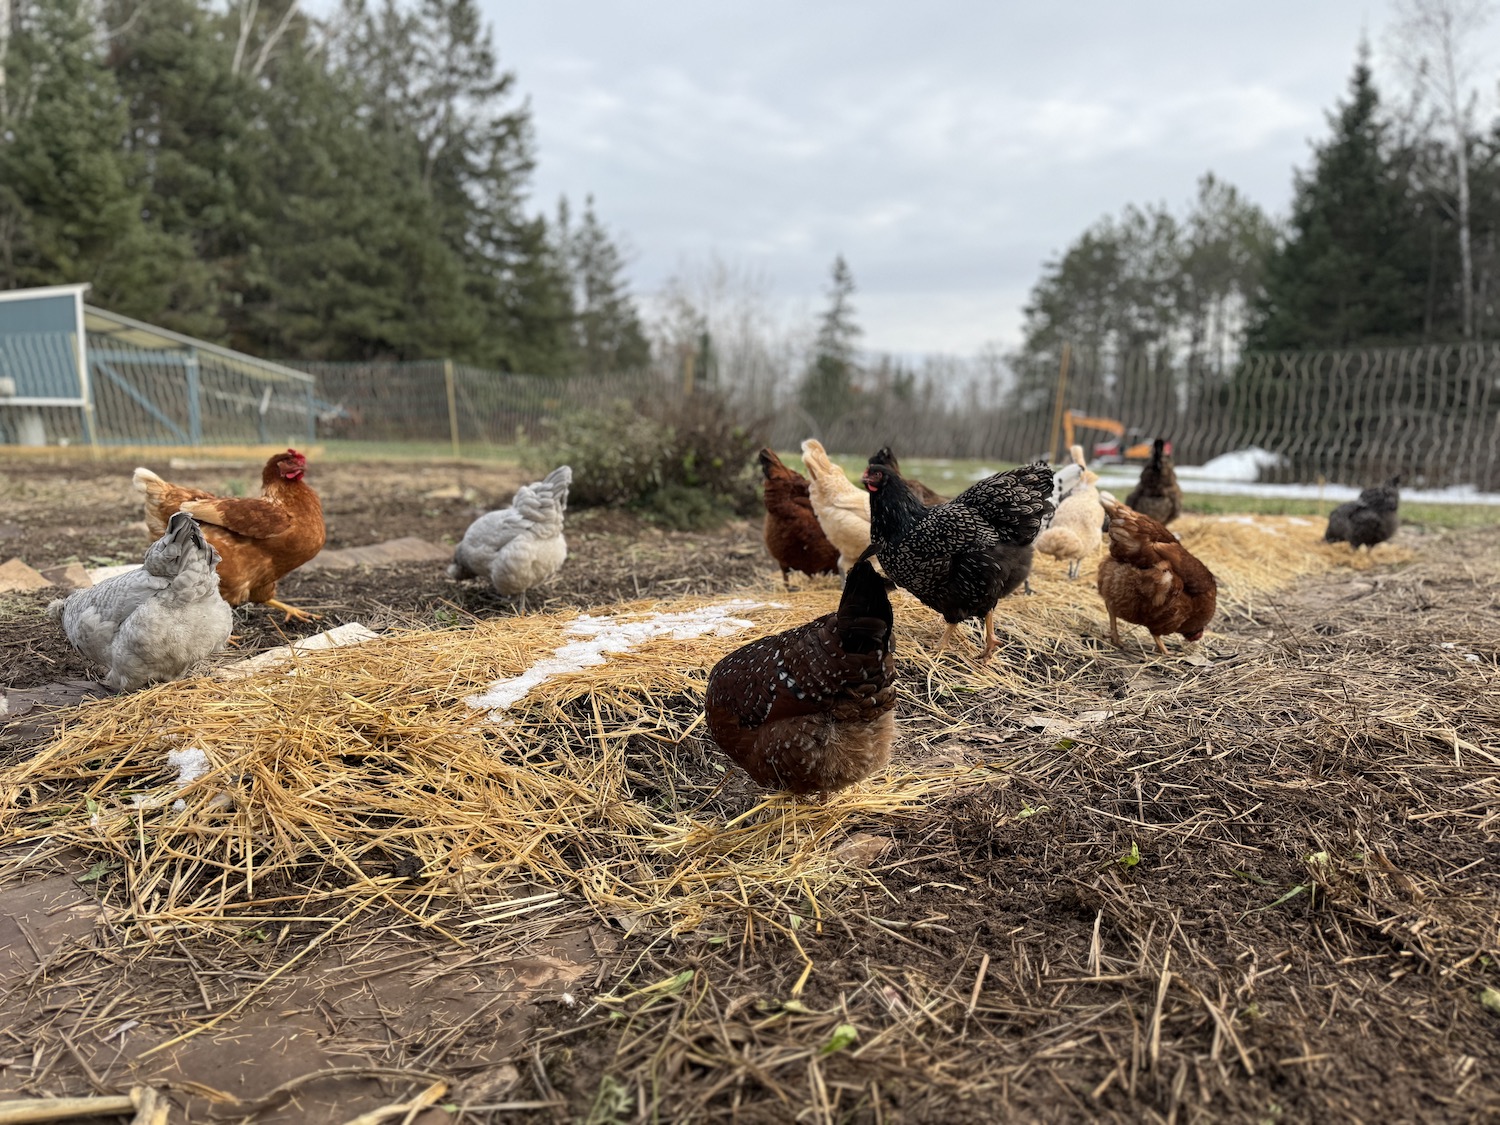 Chickens foraging in an empty garden space